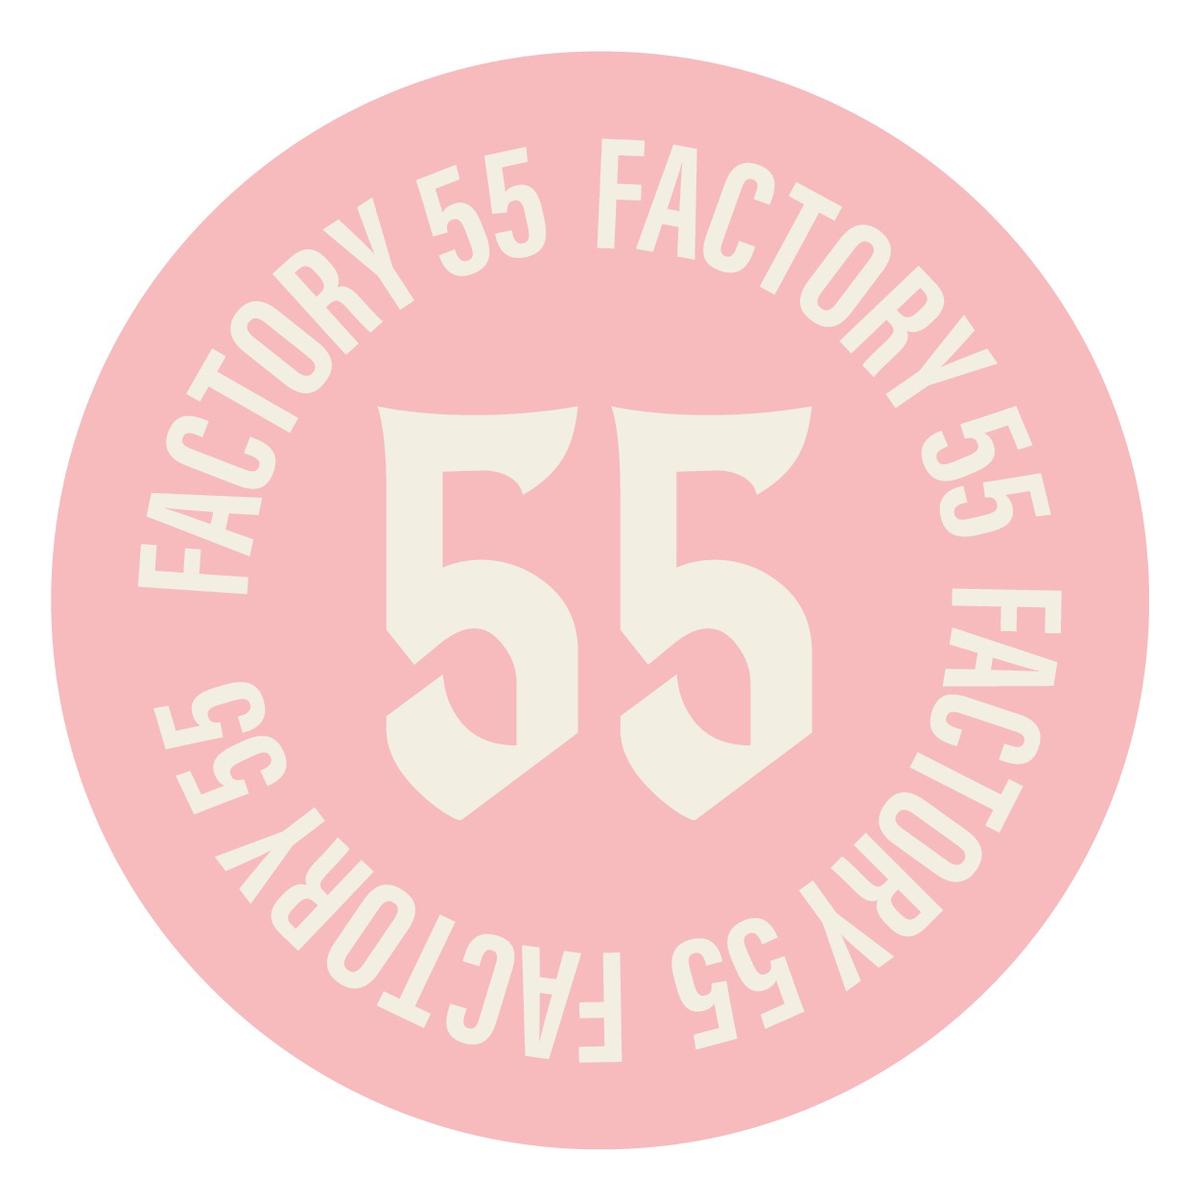 FACTORY 55 